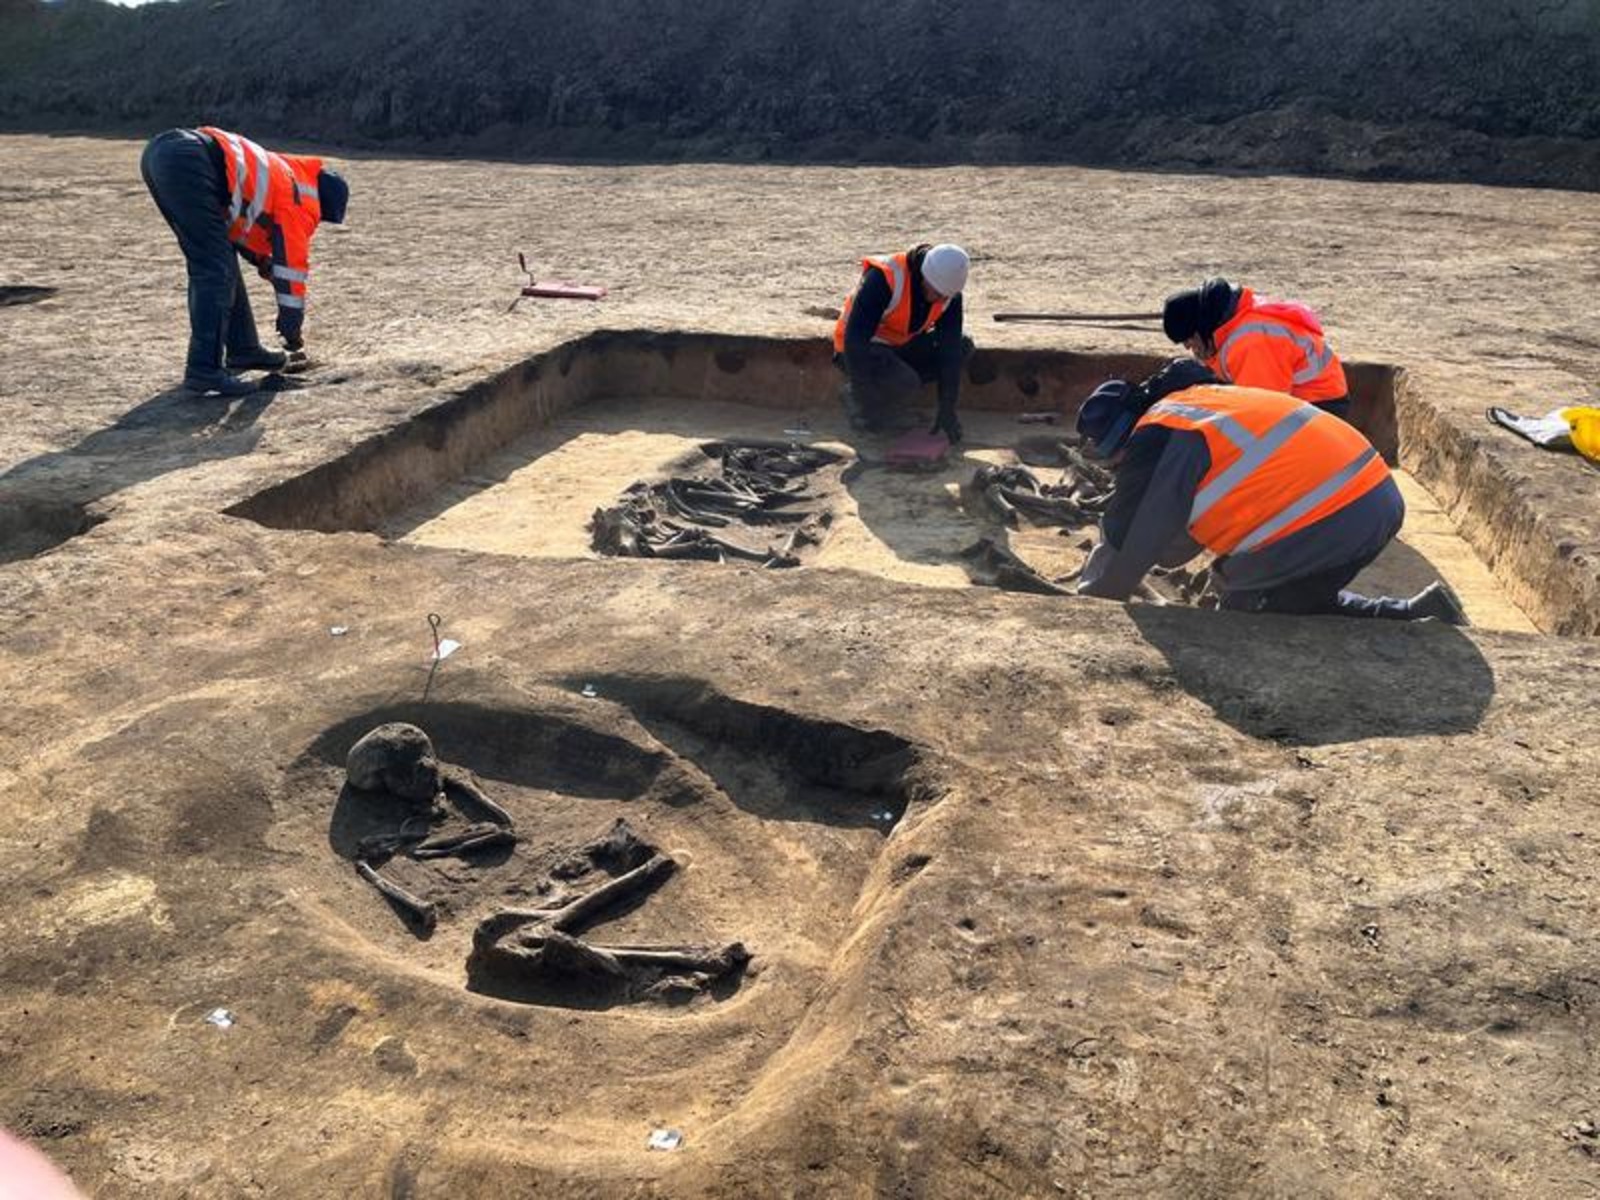 Les fouilles de Magdeburg ont permis d'exhumer plusieurs tombes datant du Néolithique. © Oliver Dietrich, State Office for Heritage Management and Archaeology Saxony-Anhalt